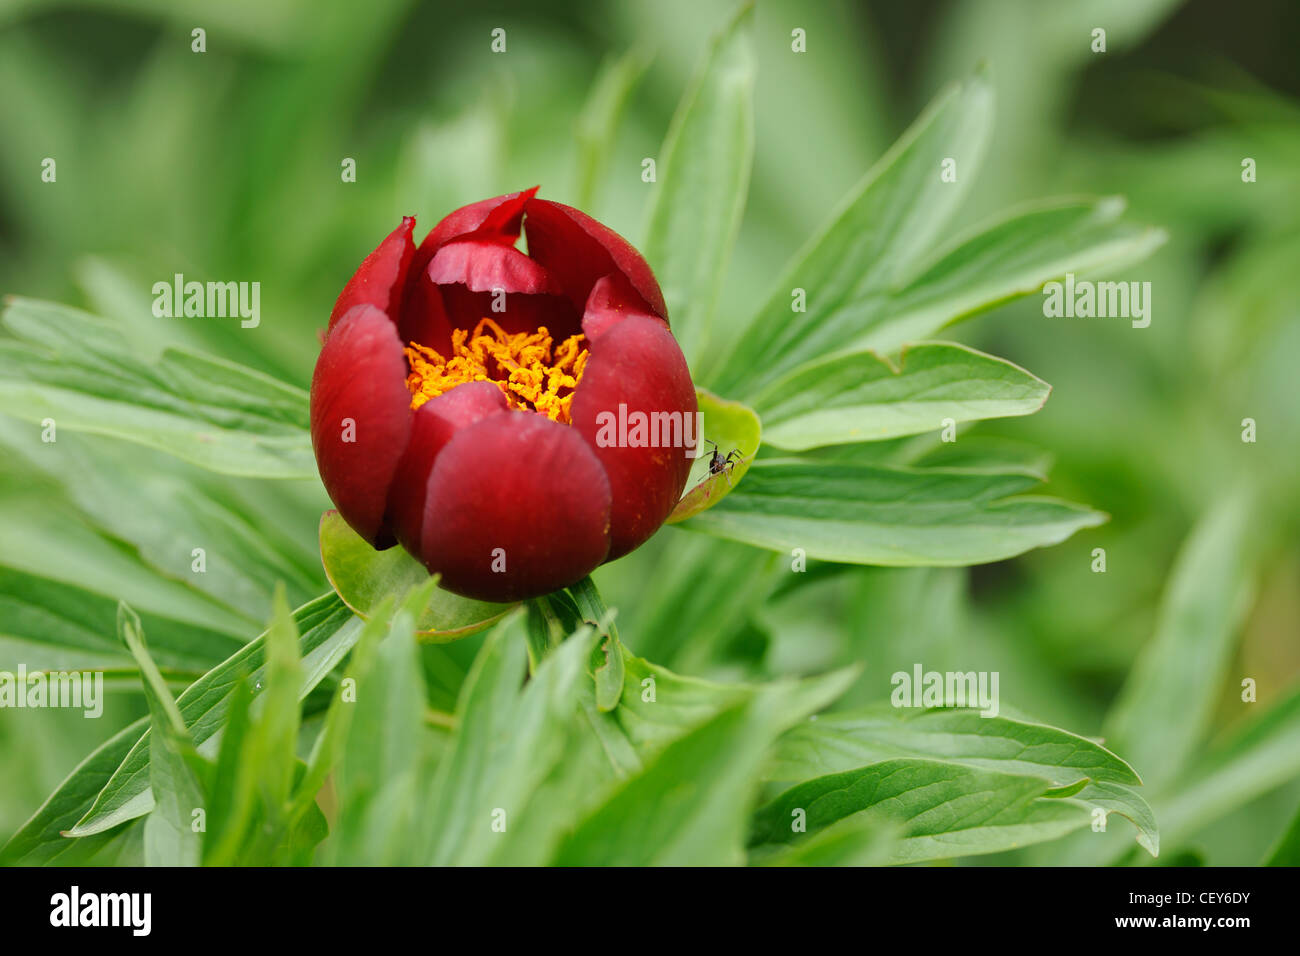 Blossom of wild red peony flower, Paeonia Stock Photo